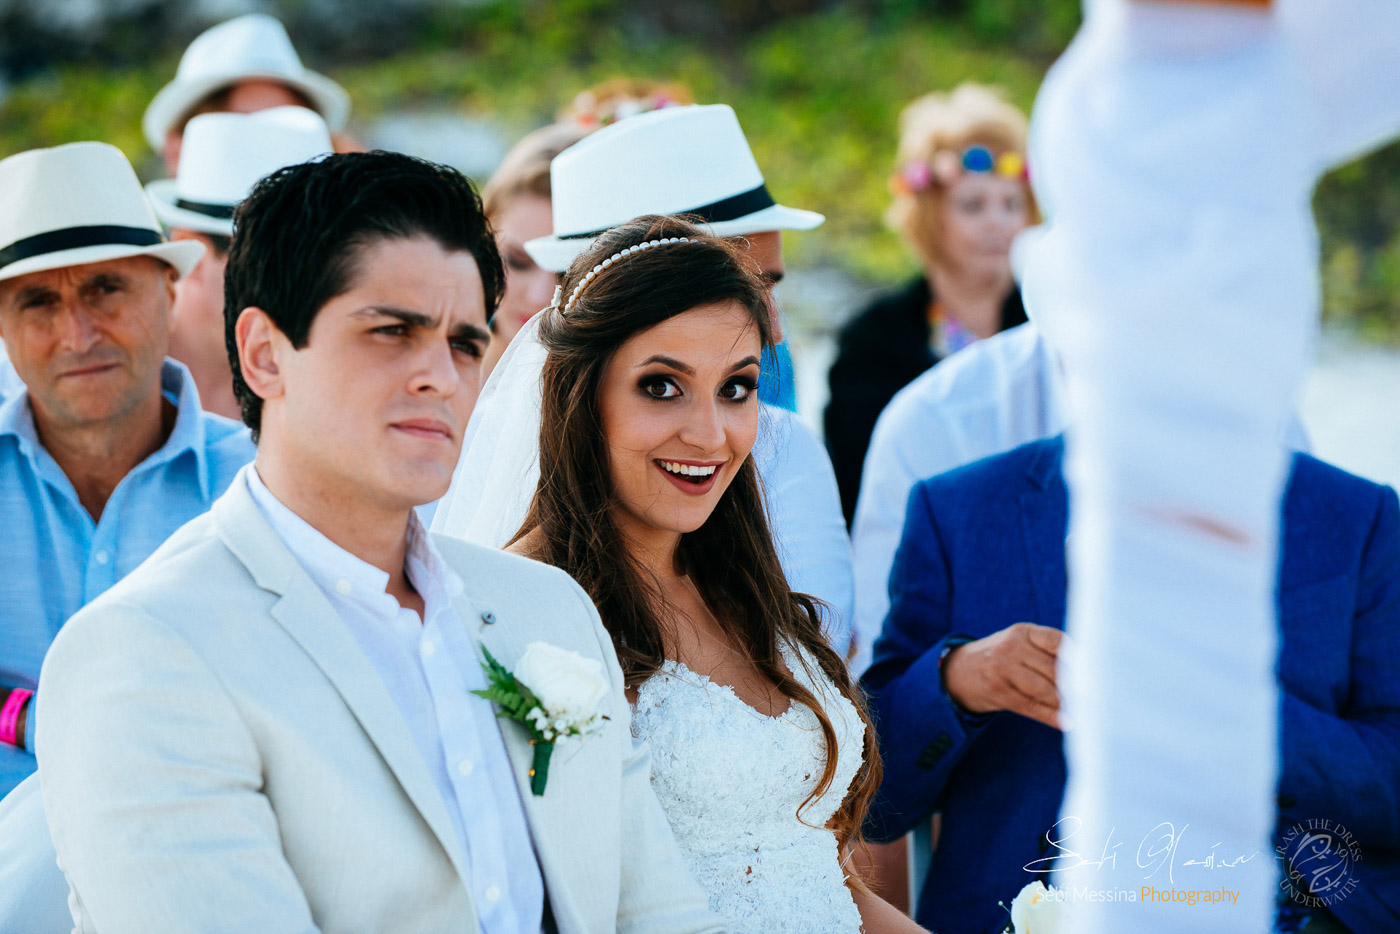 Great Parnassus Resort Wedding - Sebi Messina Photography